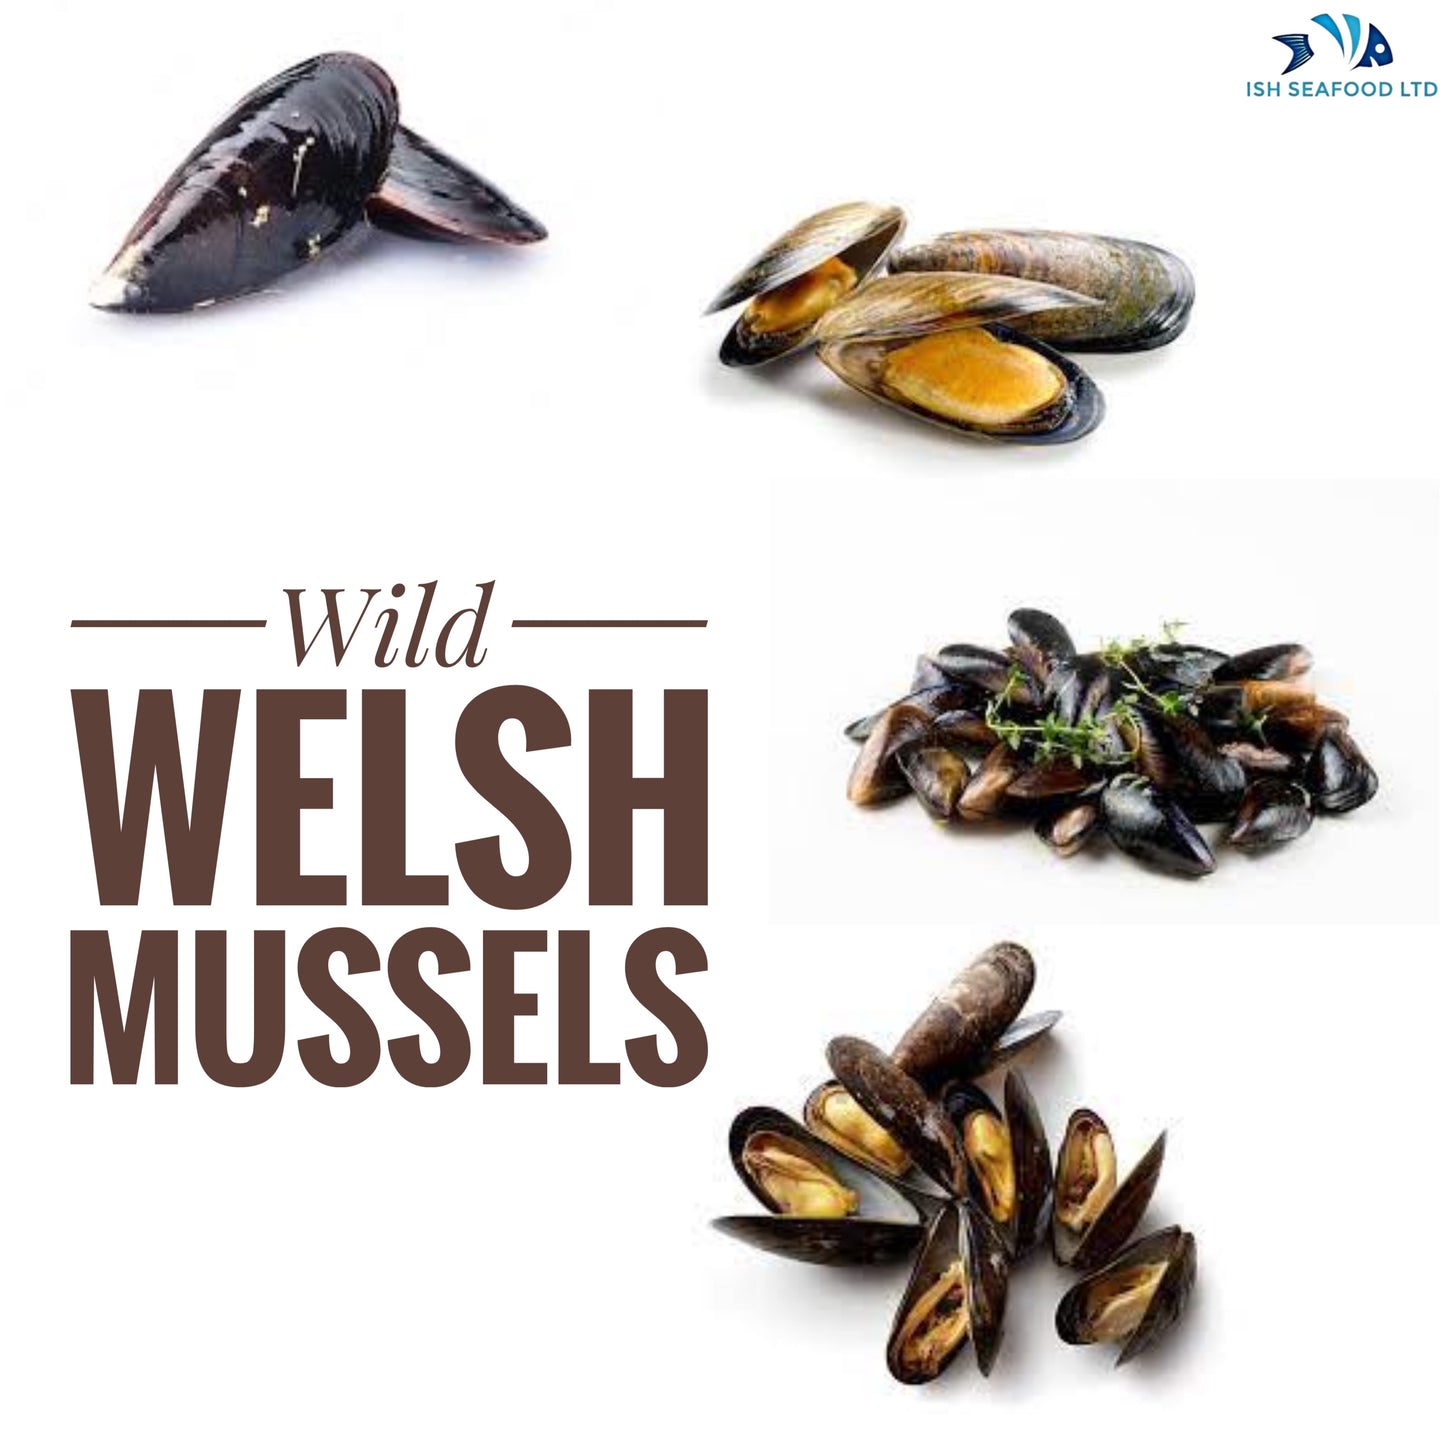 Wild Welsh Mussels